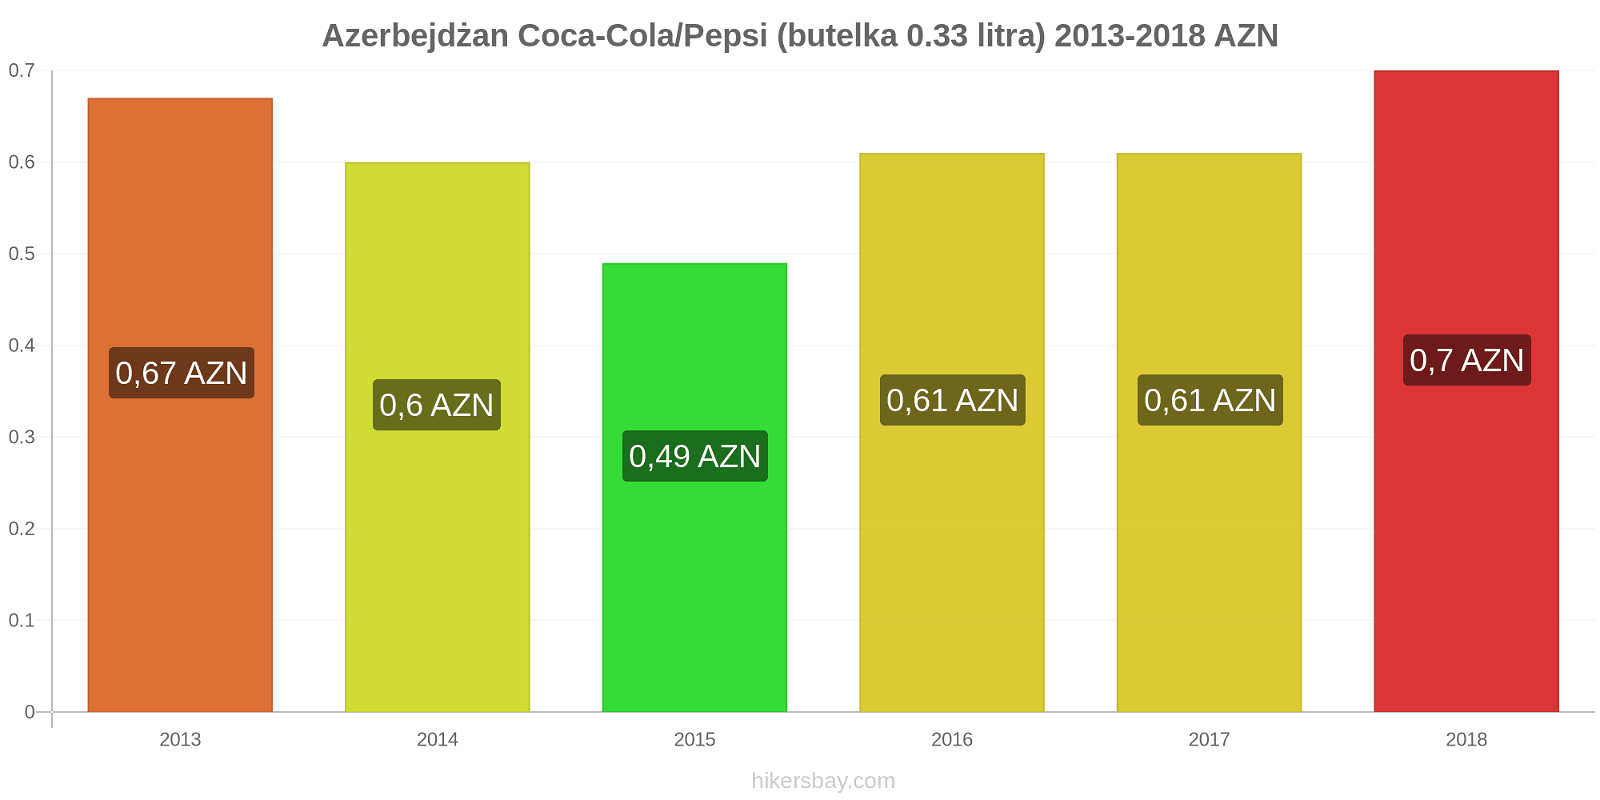 Azerbejdżan zmiany cen Coca-Cola/Pepsi (butelka 0.33 litra) hikersbay.com